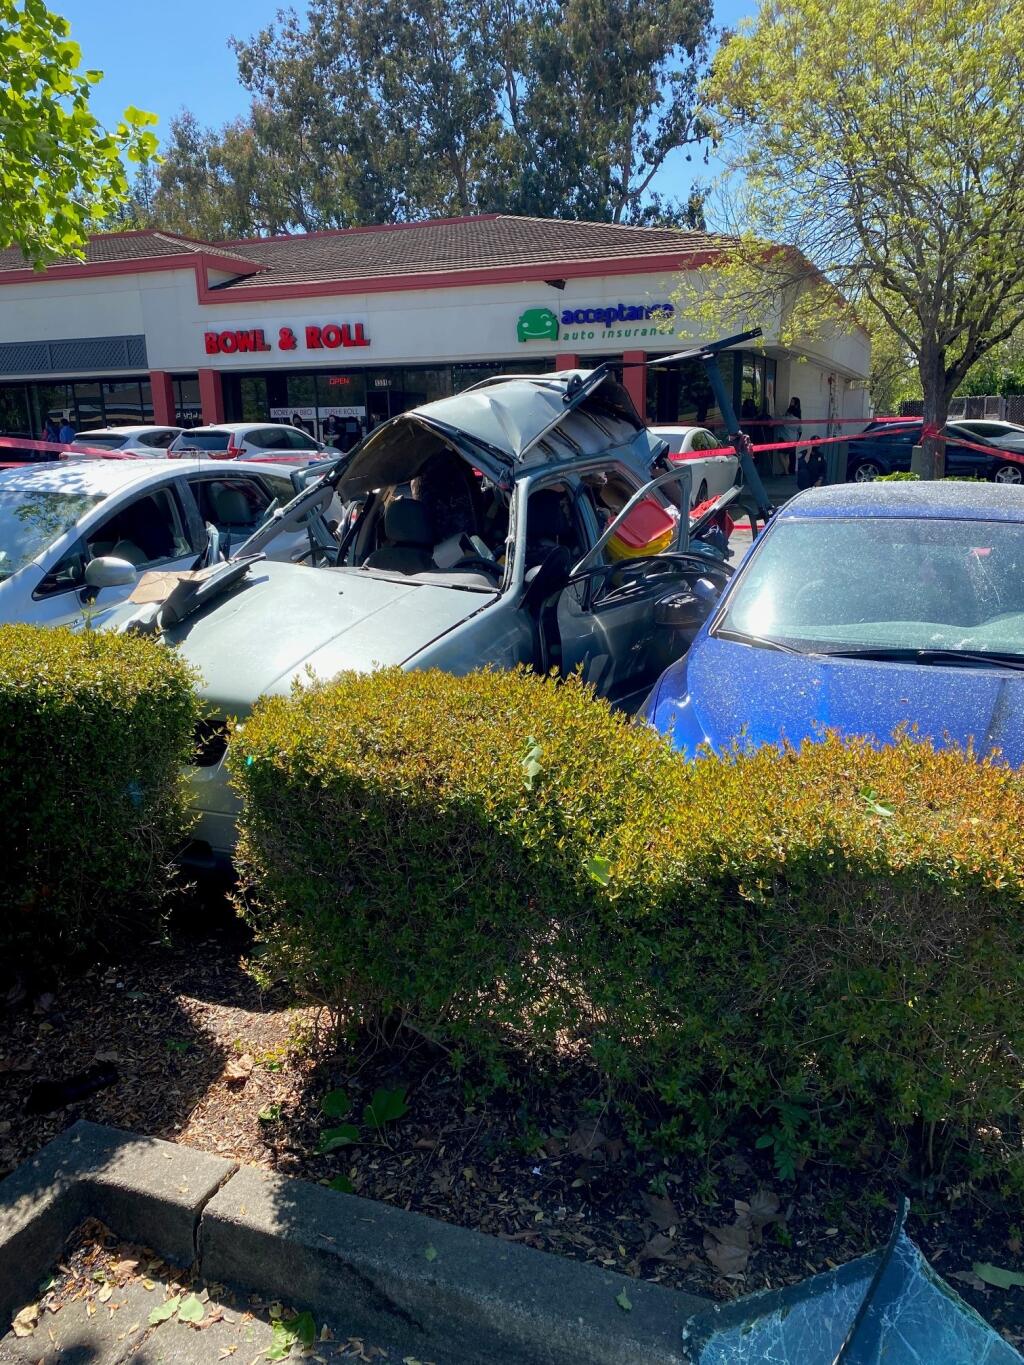 A Santa Rosa man who mishandled canisters of butane, a highly flammable liquid, caused an explosion near Santa Rosa’s Coddingtown Mall Monday afternoon, police said.